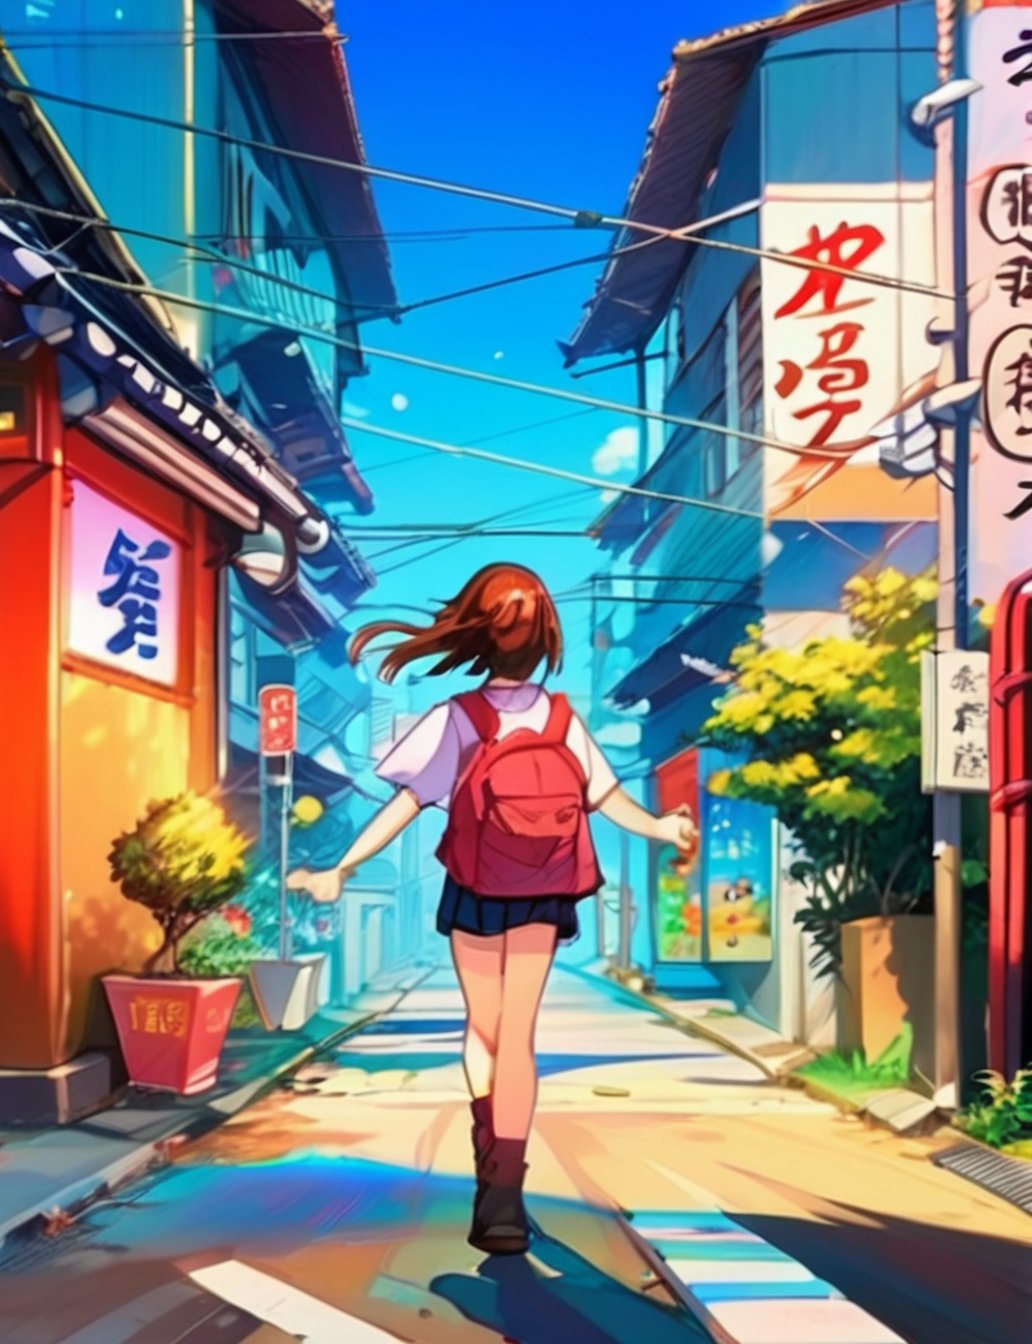 1 girl, walking on the street, anime, anime style